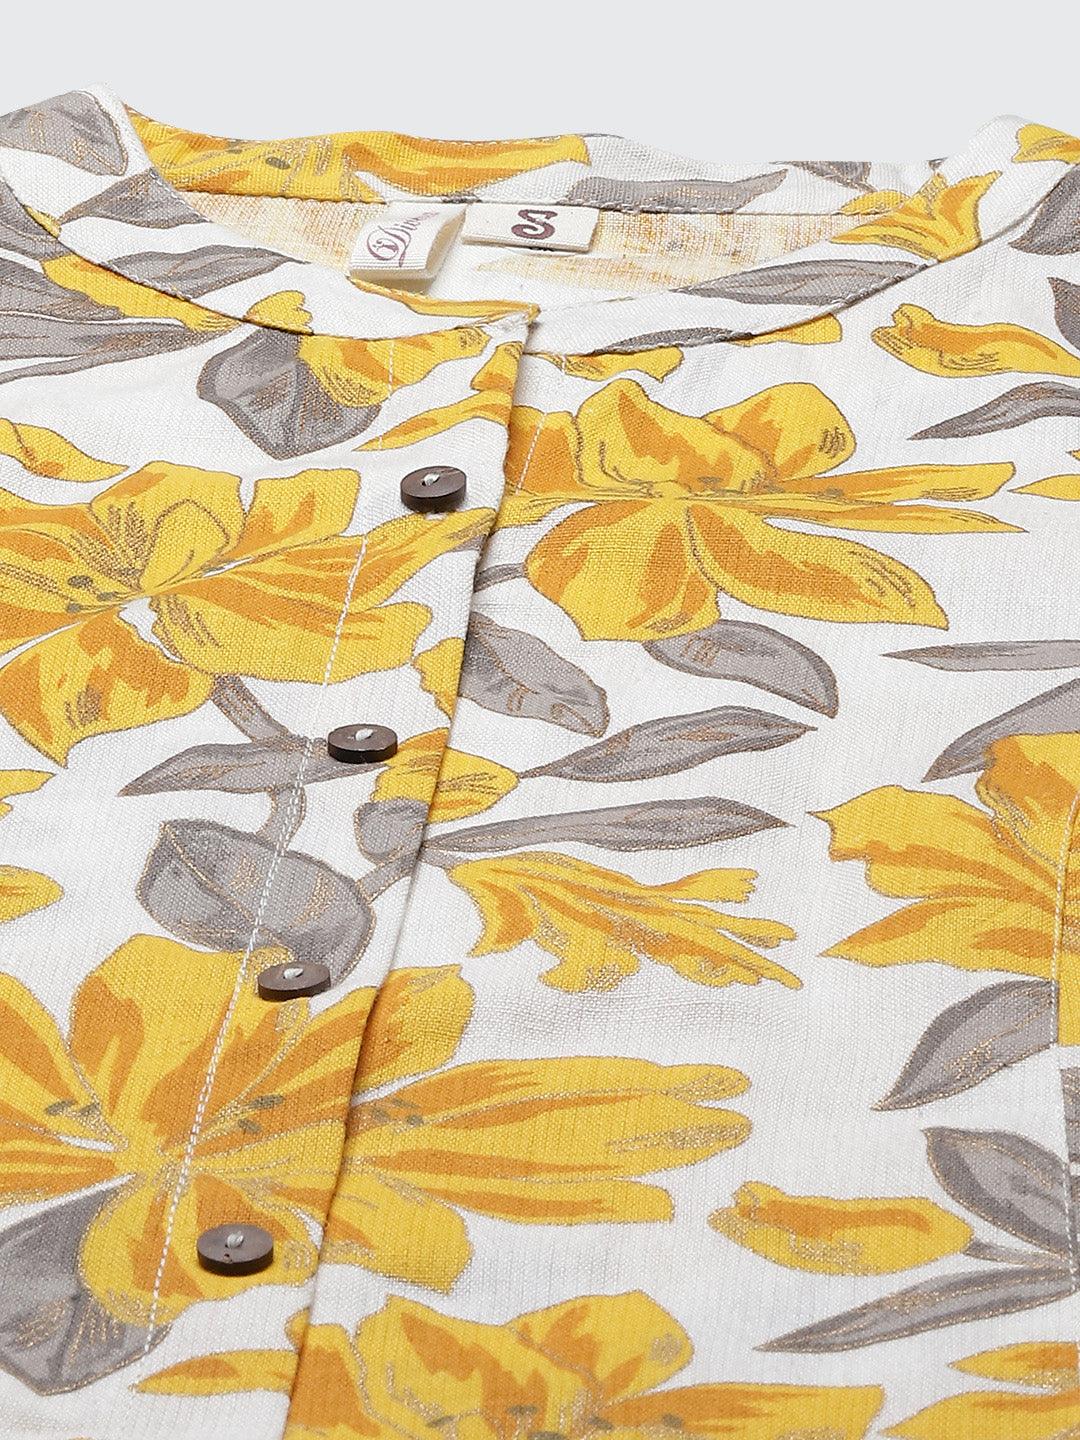 Divena Yellow Floral Print Pure Cotton A-line Kurta - divena world